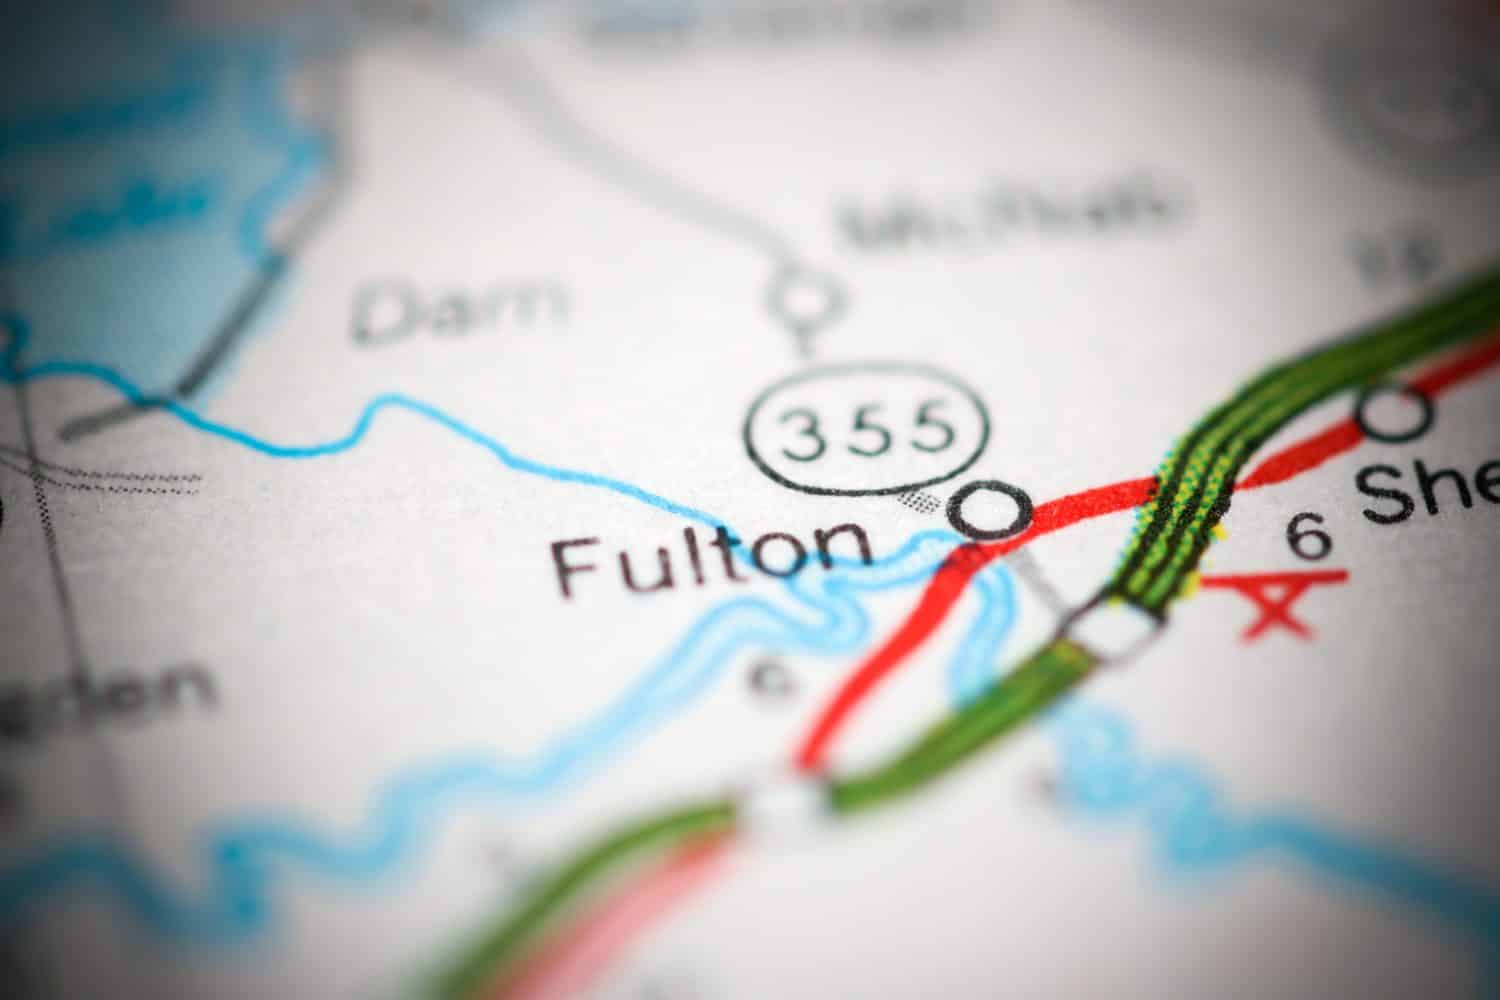 Fulton. Arkansas. USA on a geography map